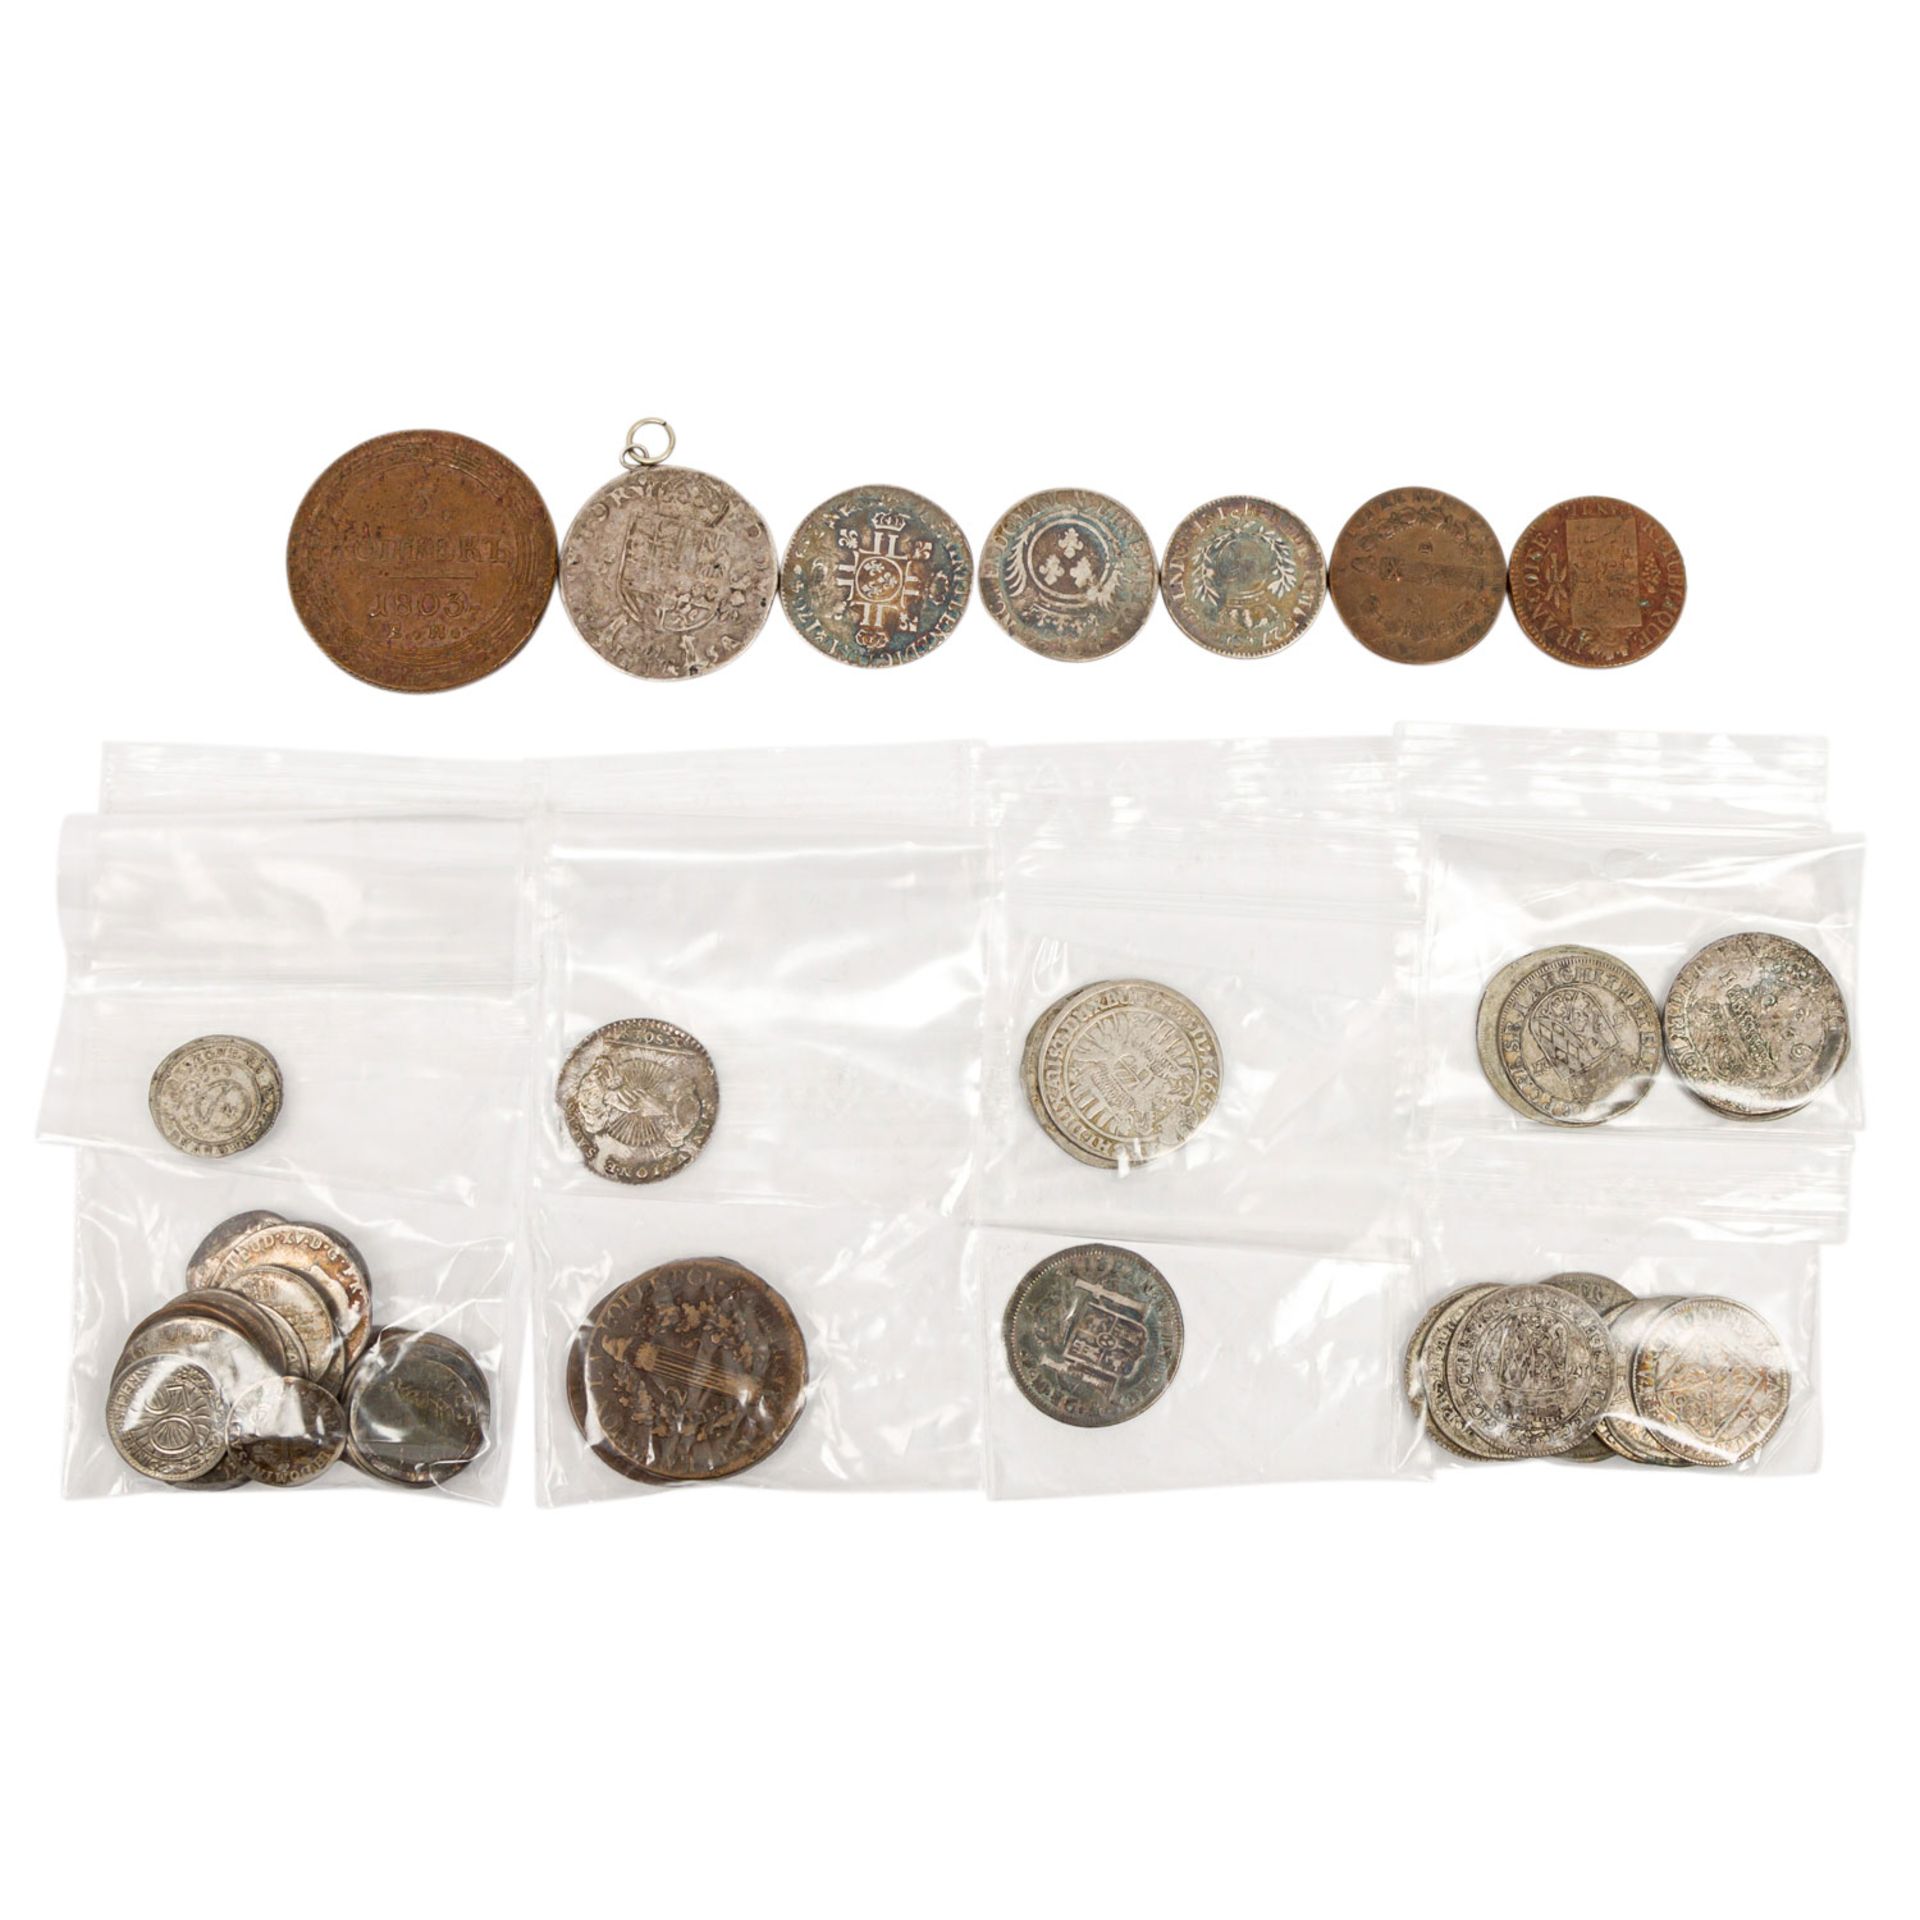 Historische Münzen aus aller Welt - 1 x Russland/Bronze - 5 Kopeken 1803/EM, s+, Kerben, berieben. - Bild 2 aus 2